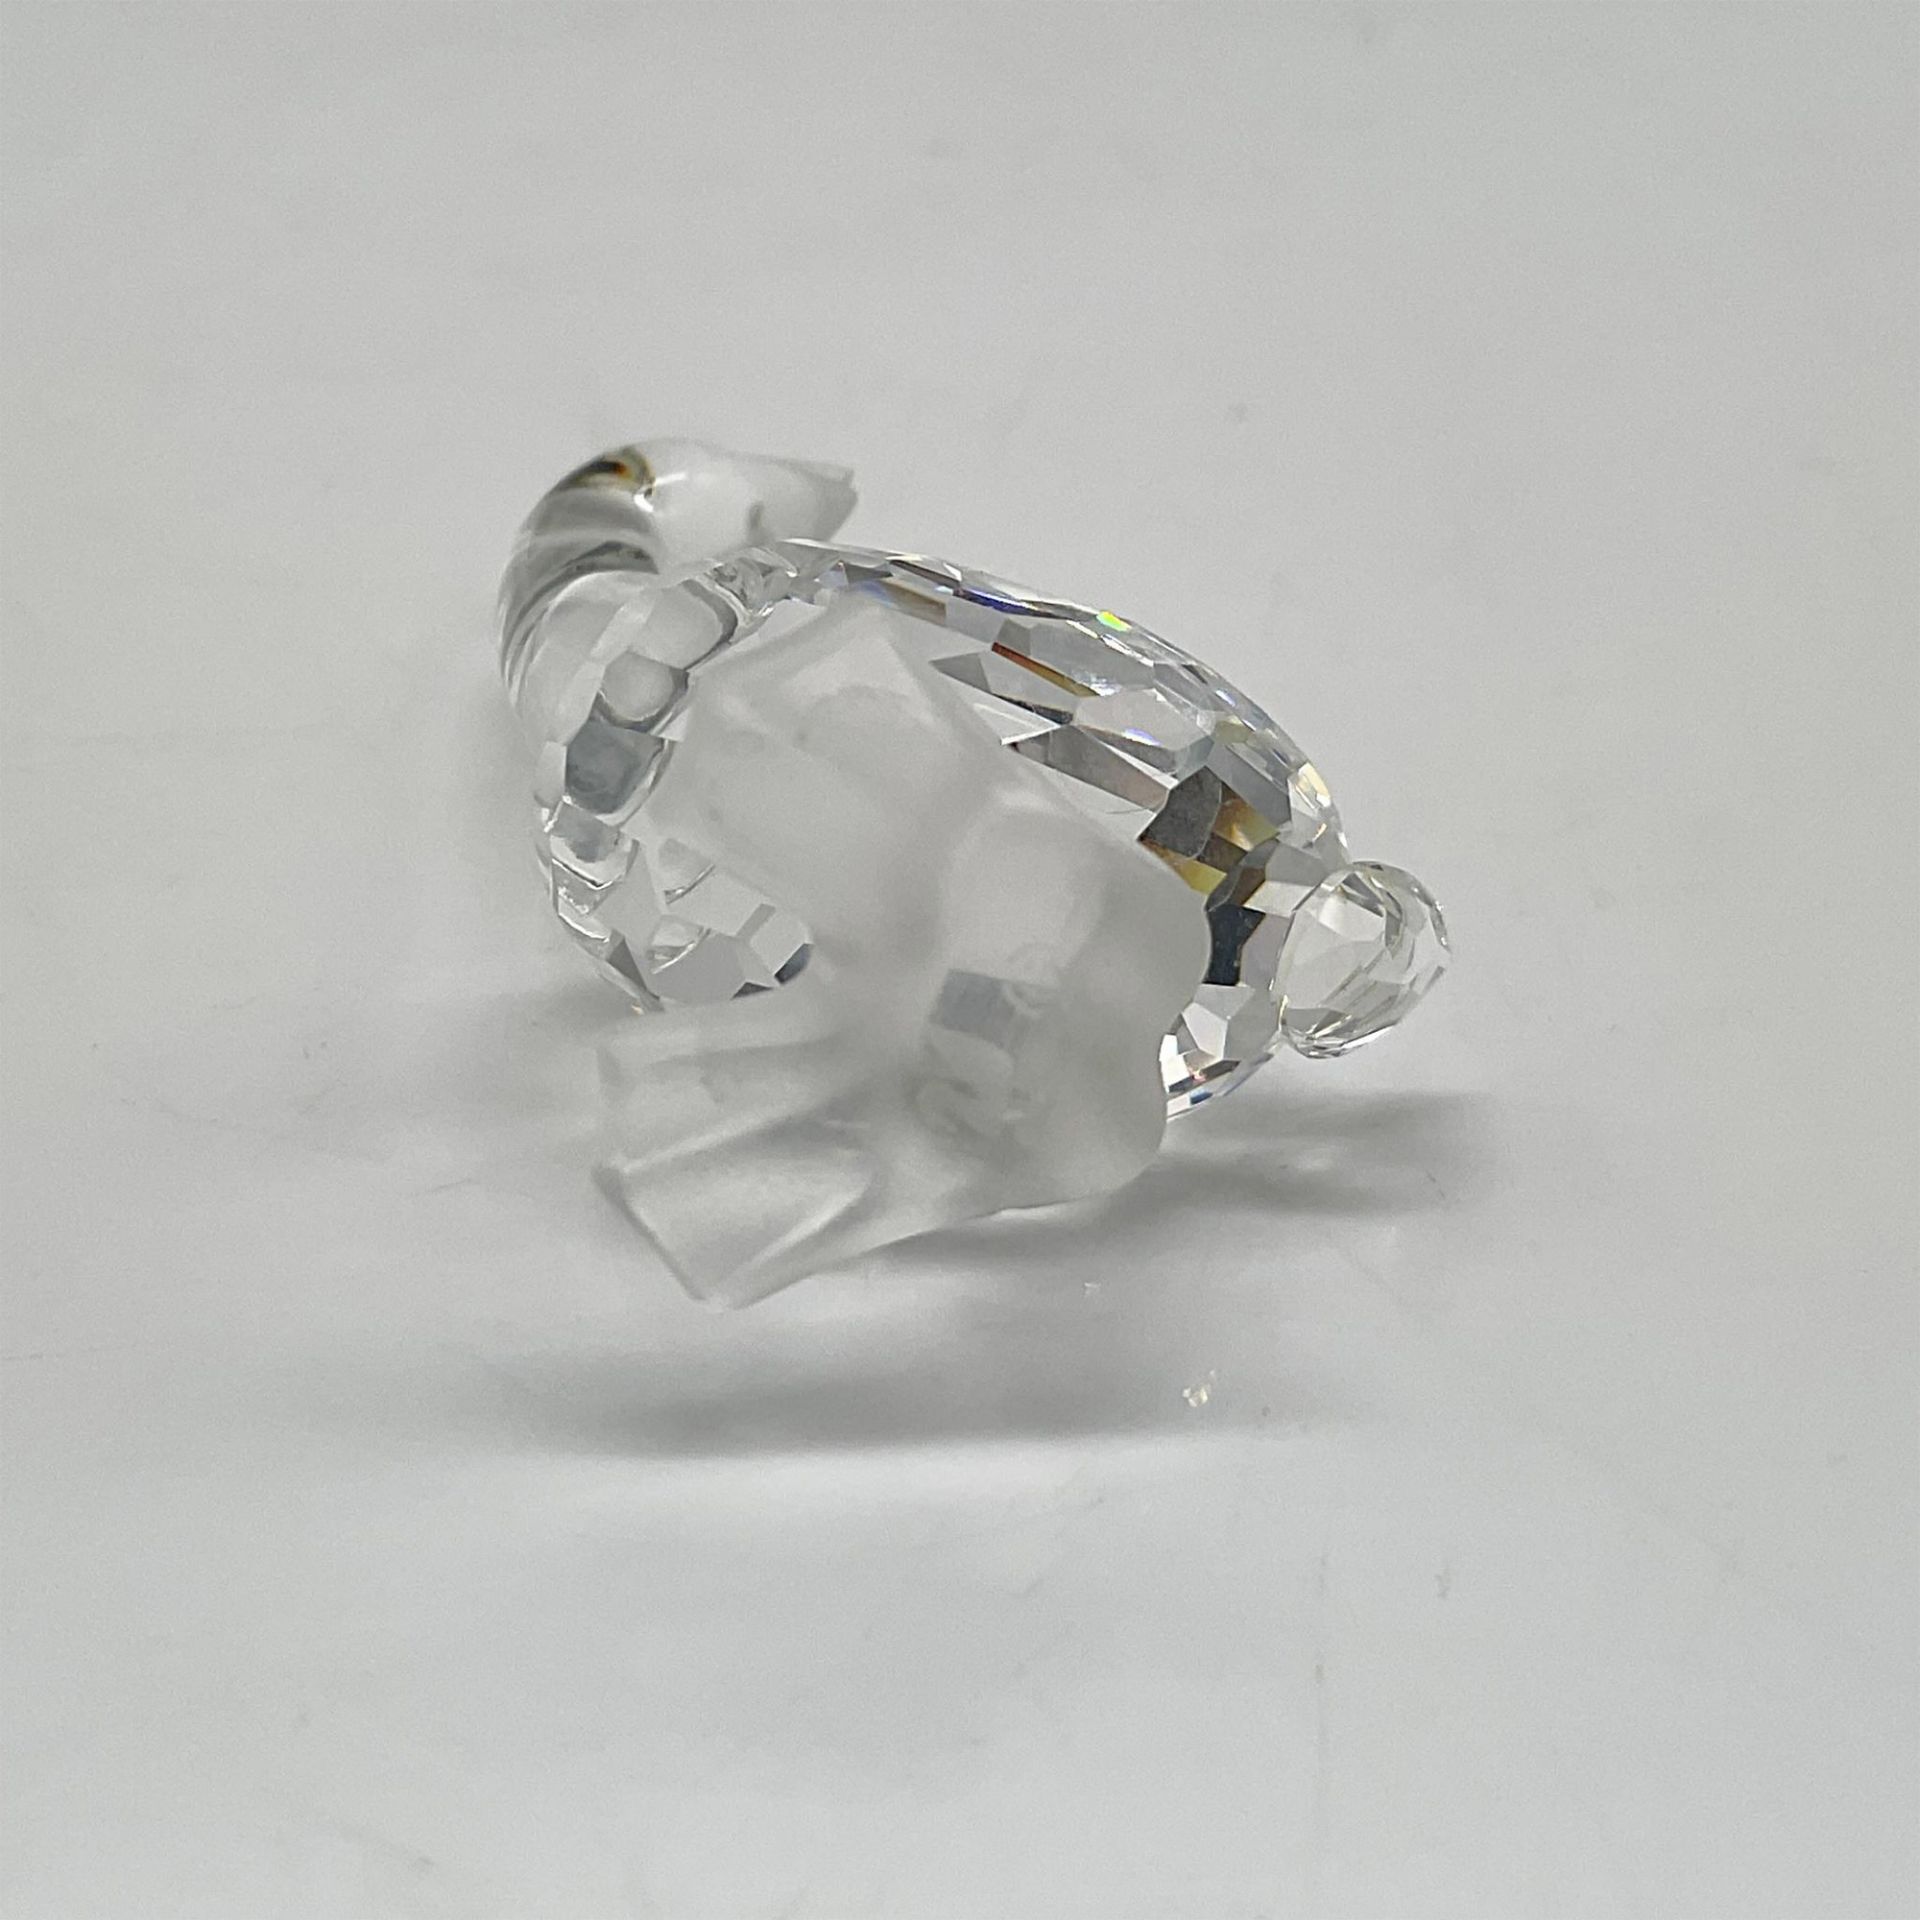 Swarovski Silver Crystal, Gosling Dick - Image 3 of 4